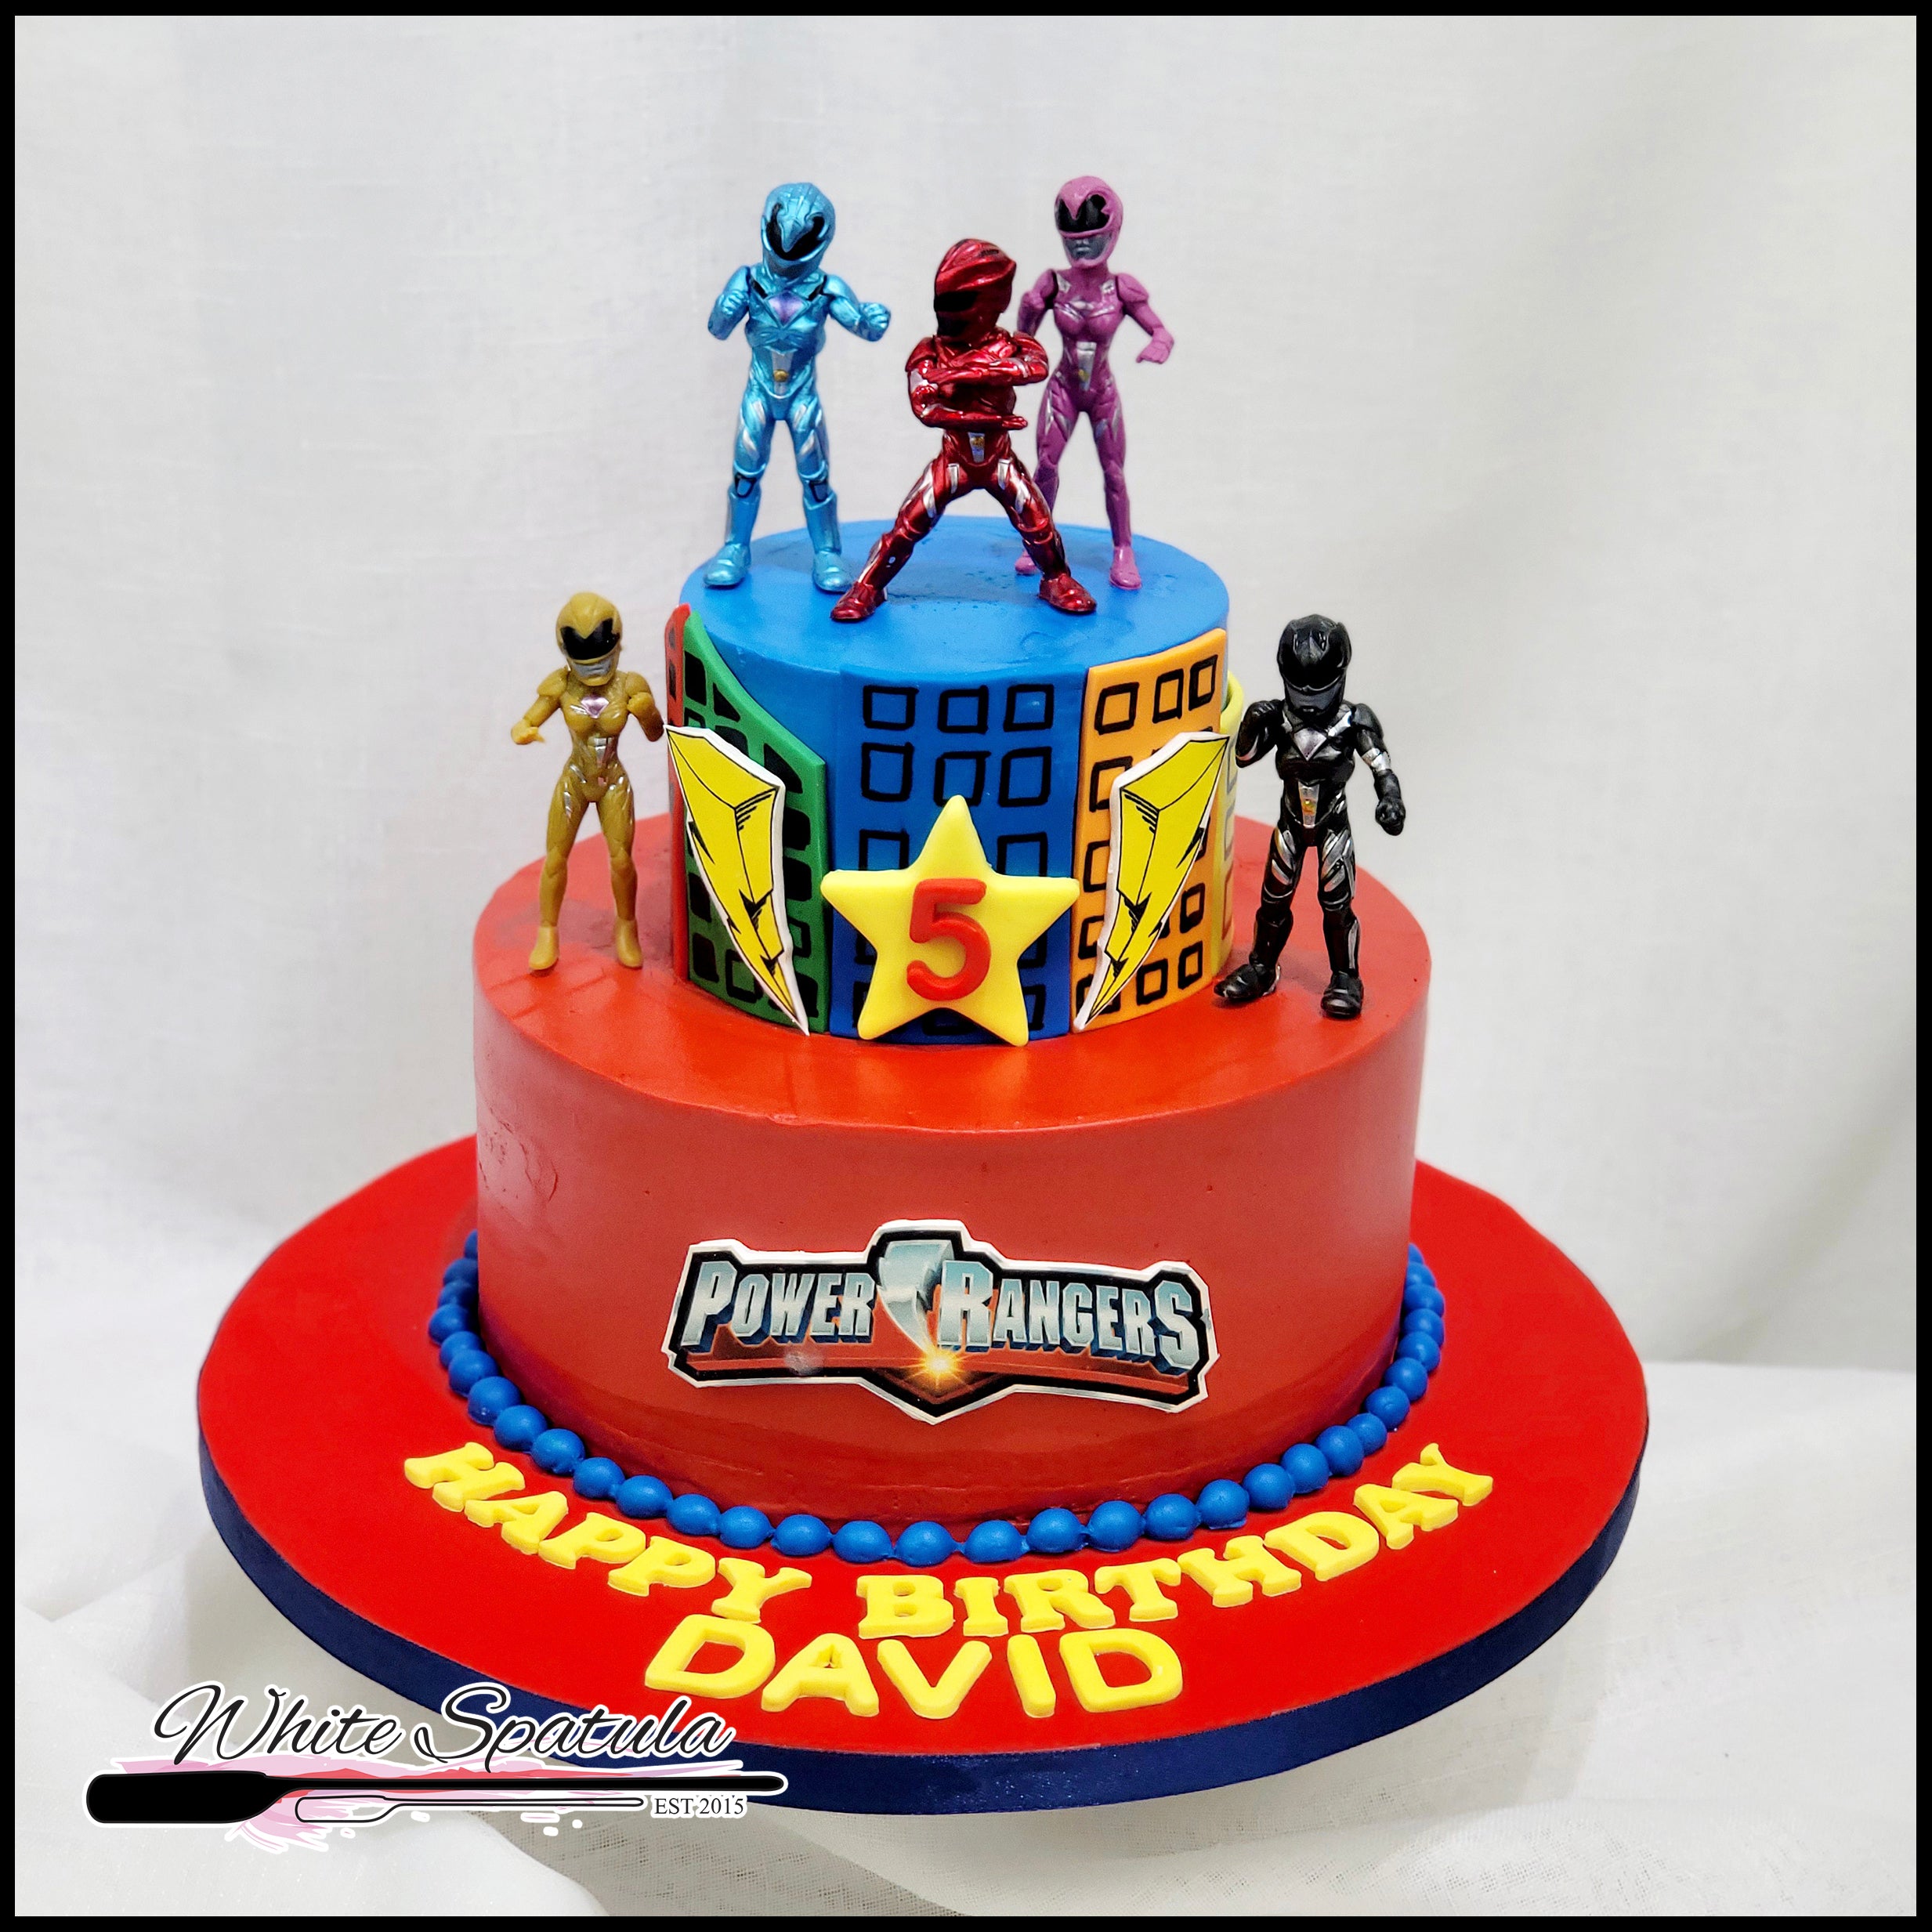 Power Rangers Decorative Baking in Power Rangers Party Supplies - Walmart .com